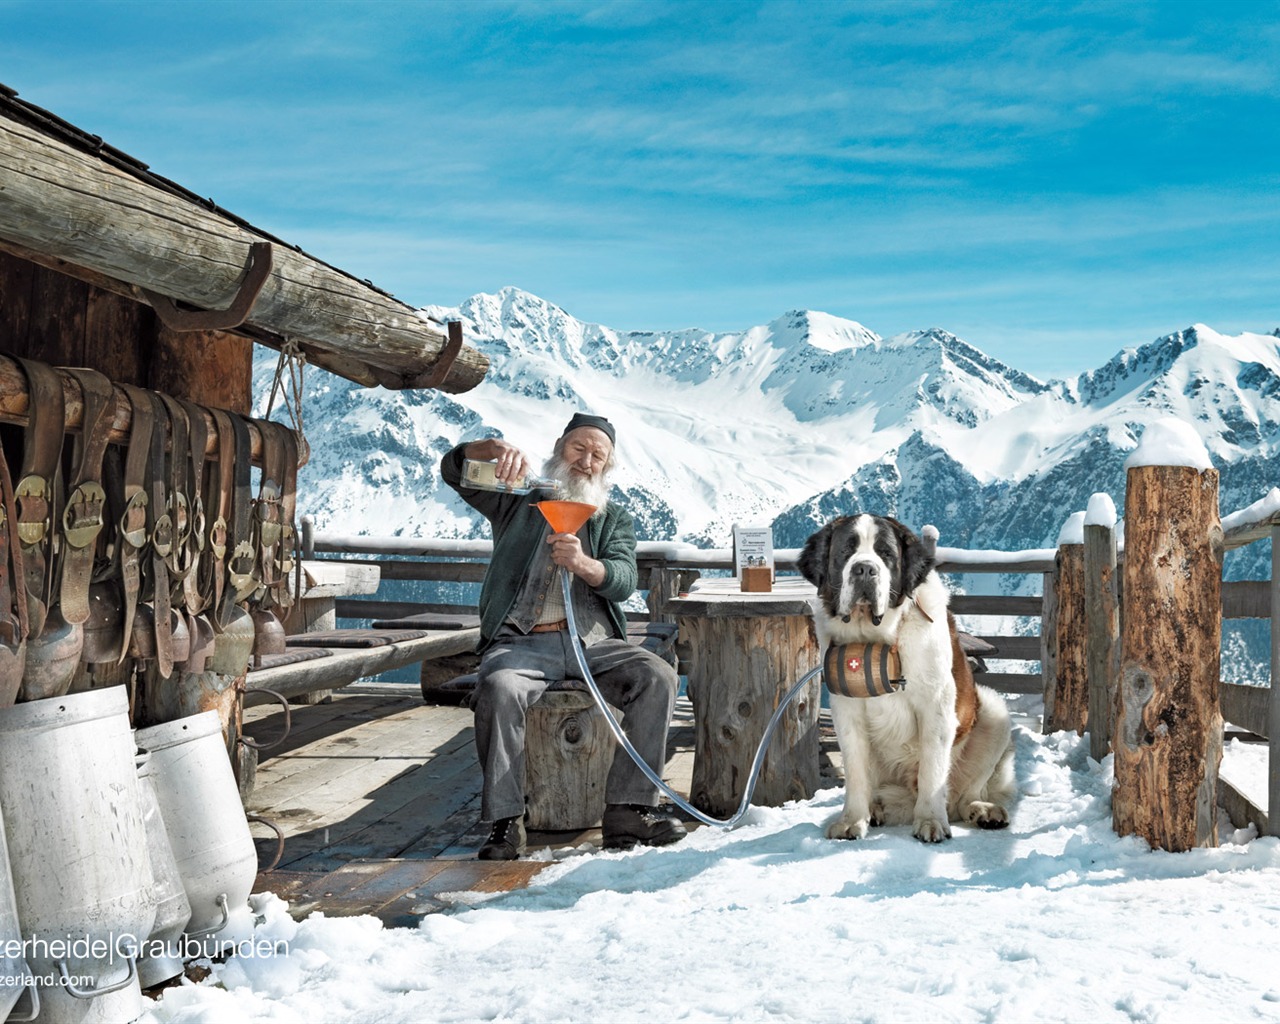 Swiss fond d'écran de neige en hiver #11 - 1280x1024